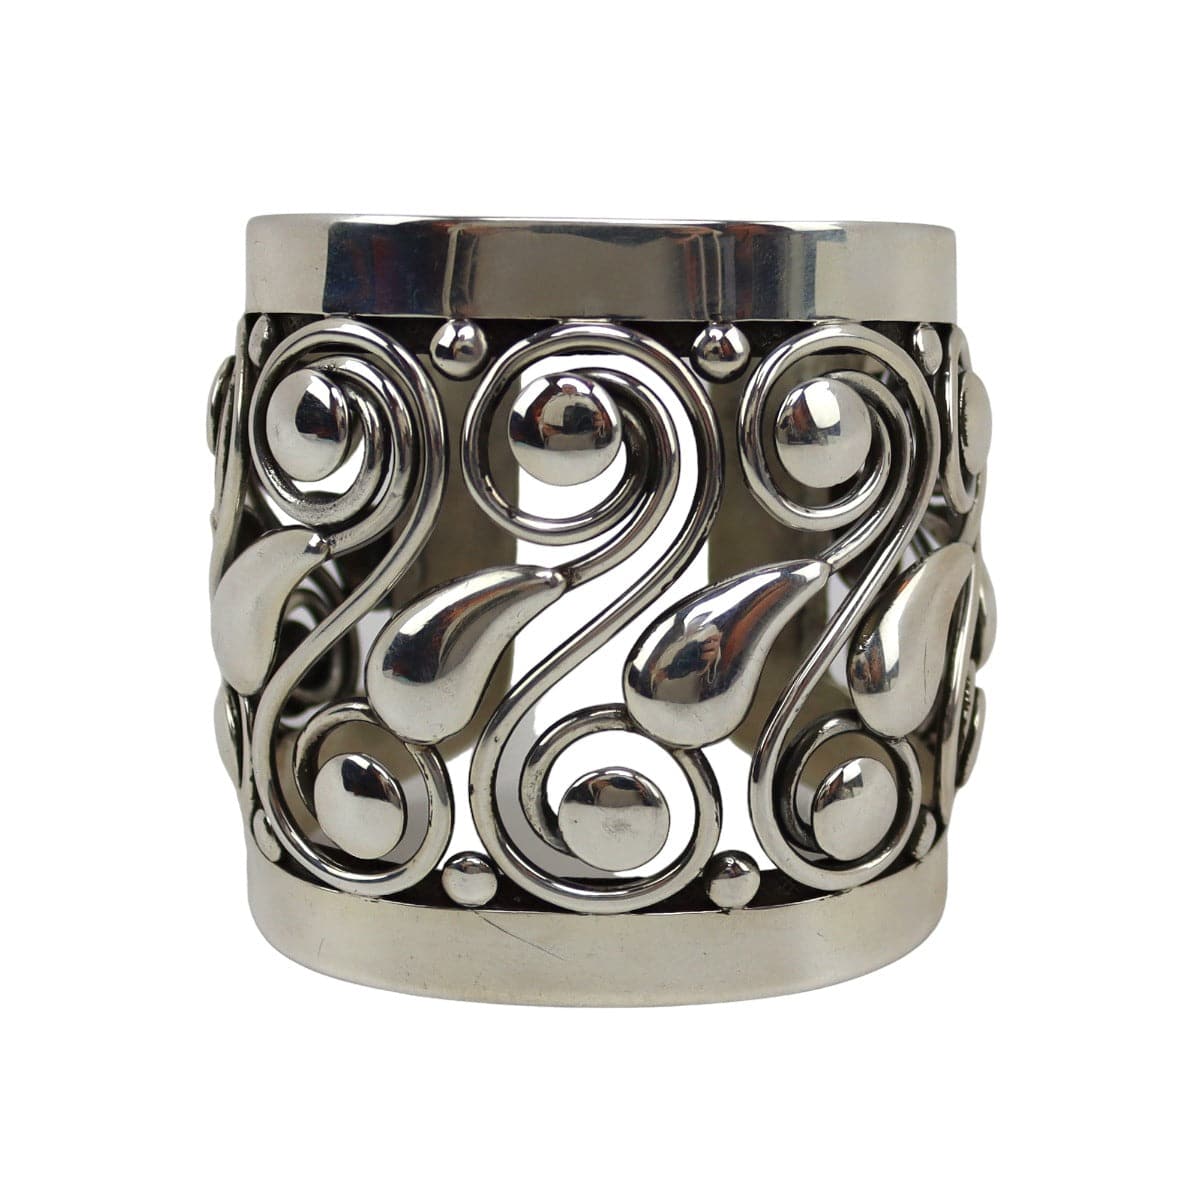 Frank Patania Sr. (1898-1964) - Silver Bracelet with Spiral Design c. late 1950s (J91699-1022-008)